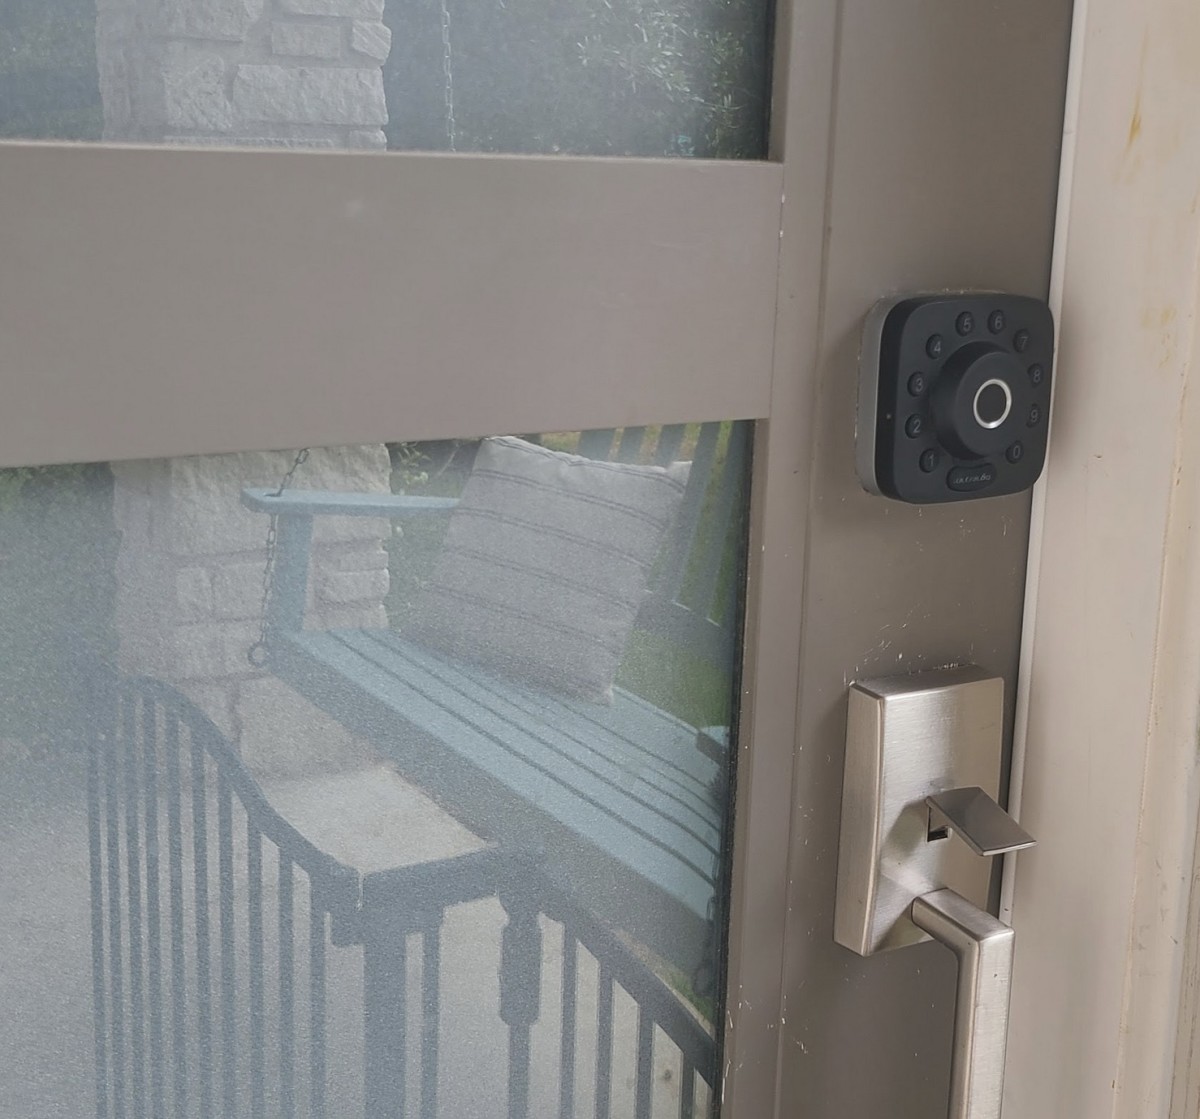 Review of the Ultraloq Fingerprint ID Front Door Lock